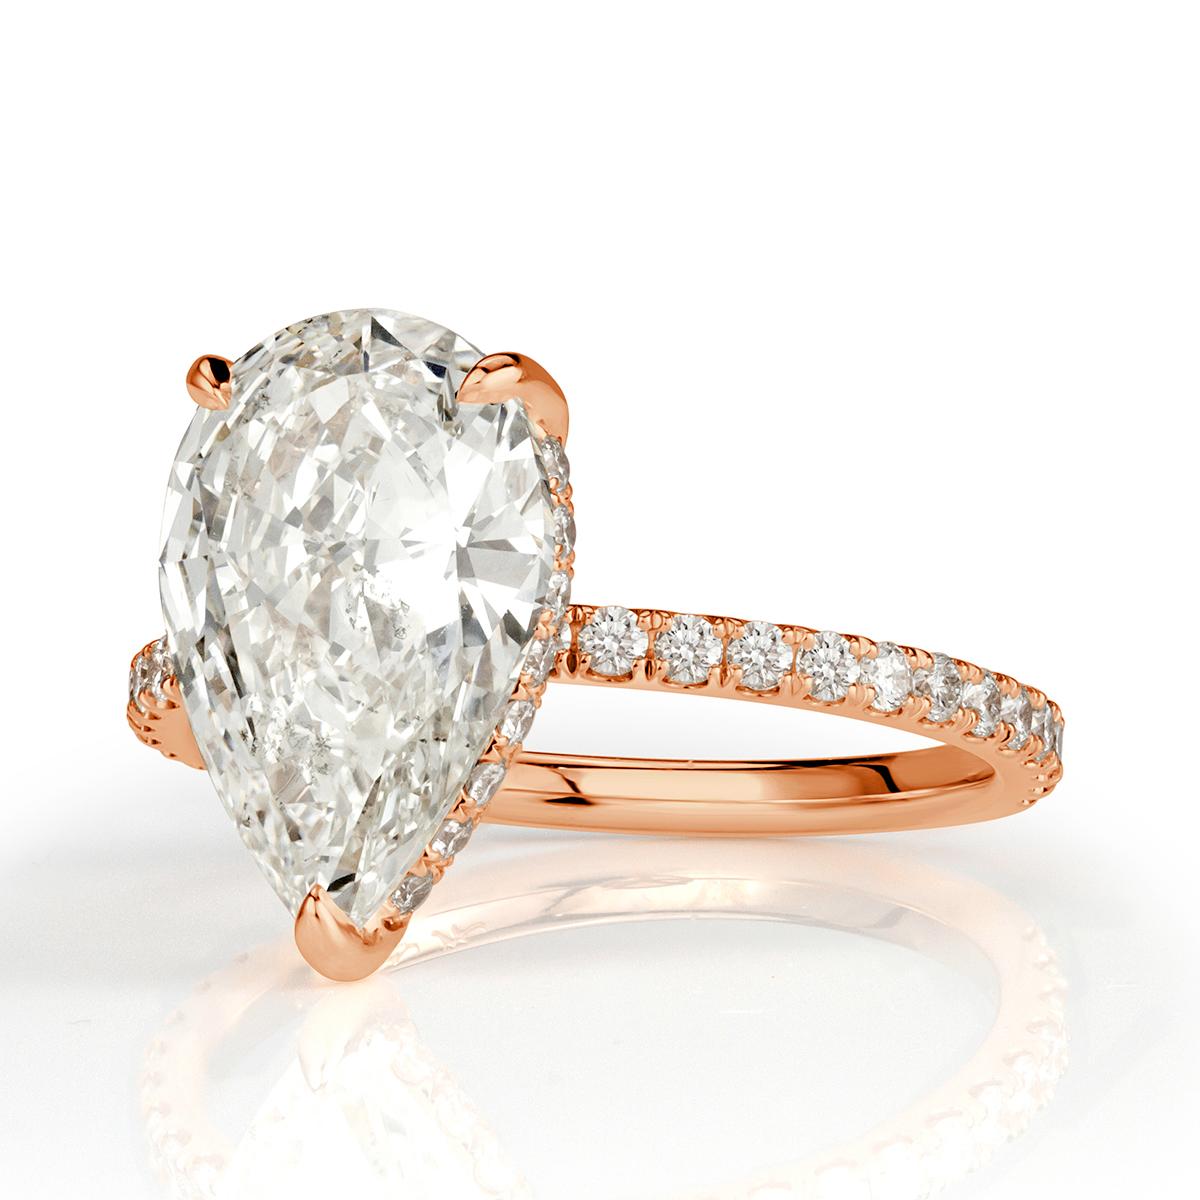 Women's or Men's Mark Broumand 3.99 Carat Pear Shaped Diamond Engagement Ring